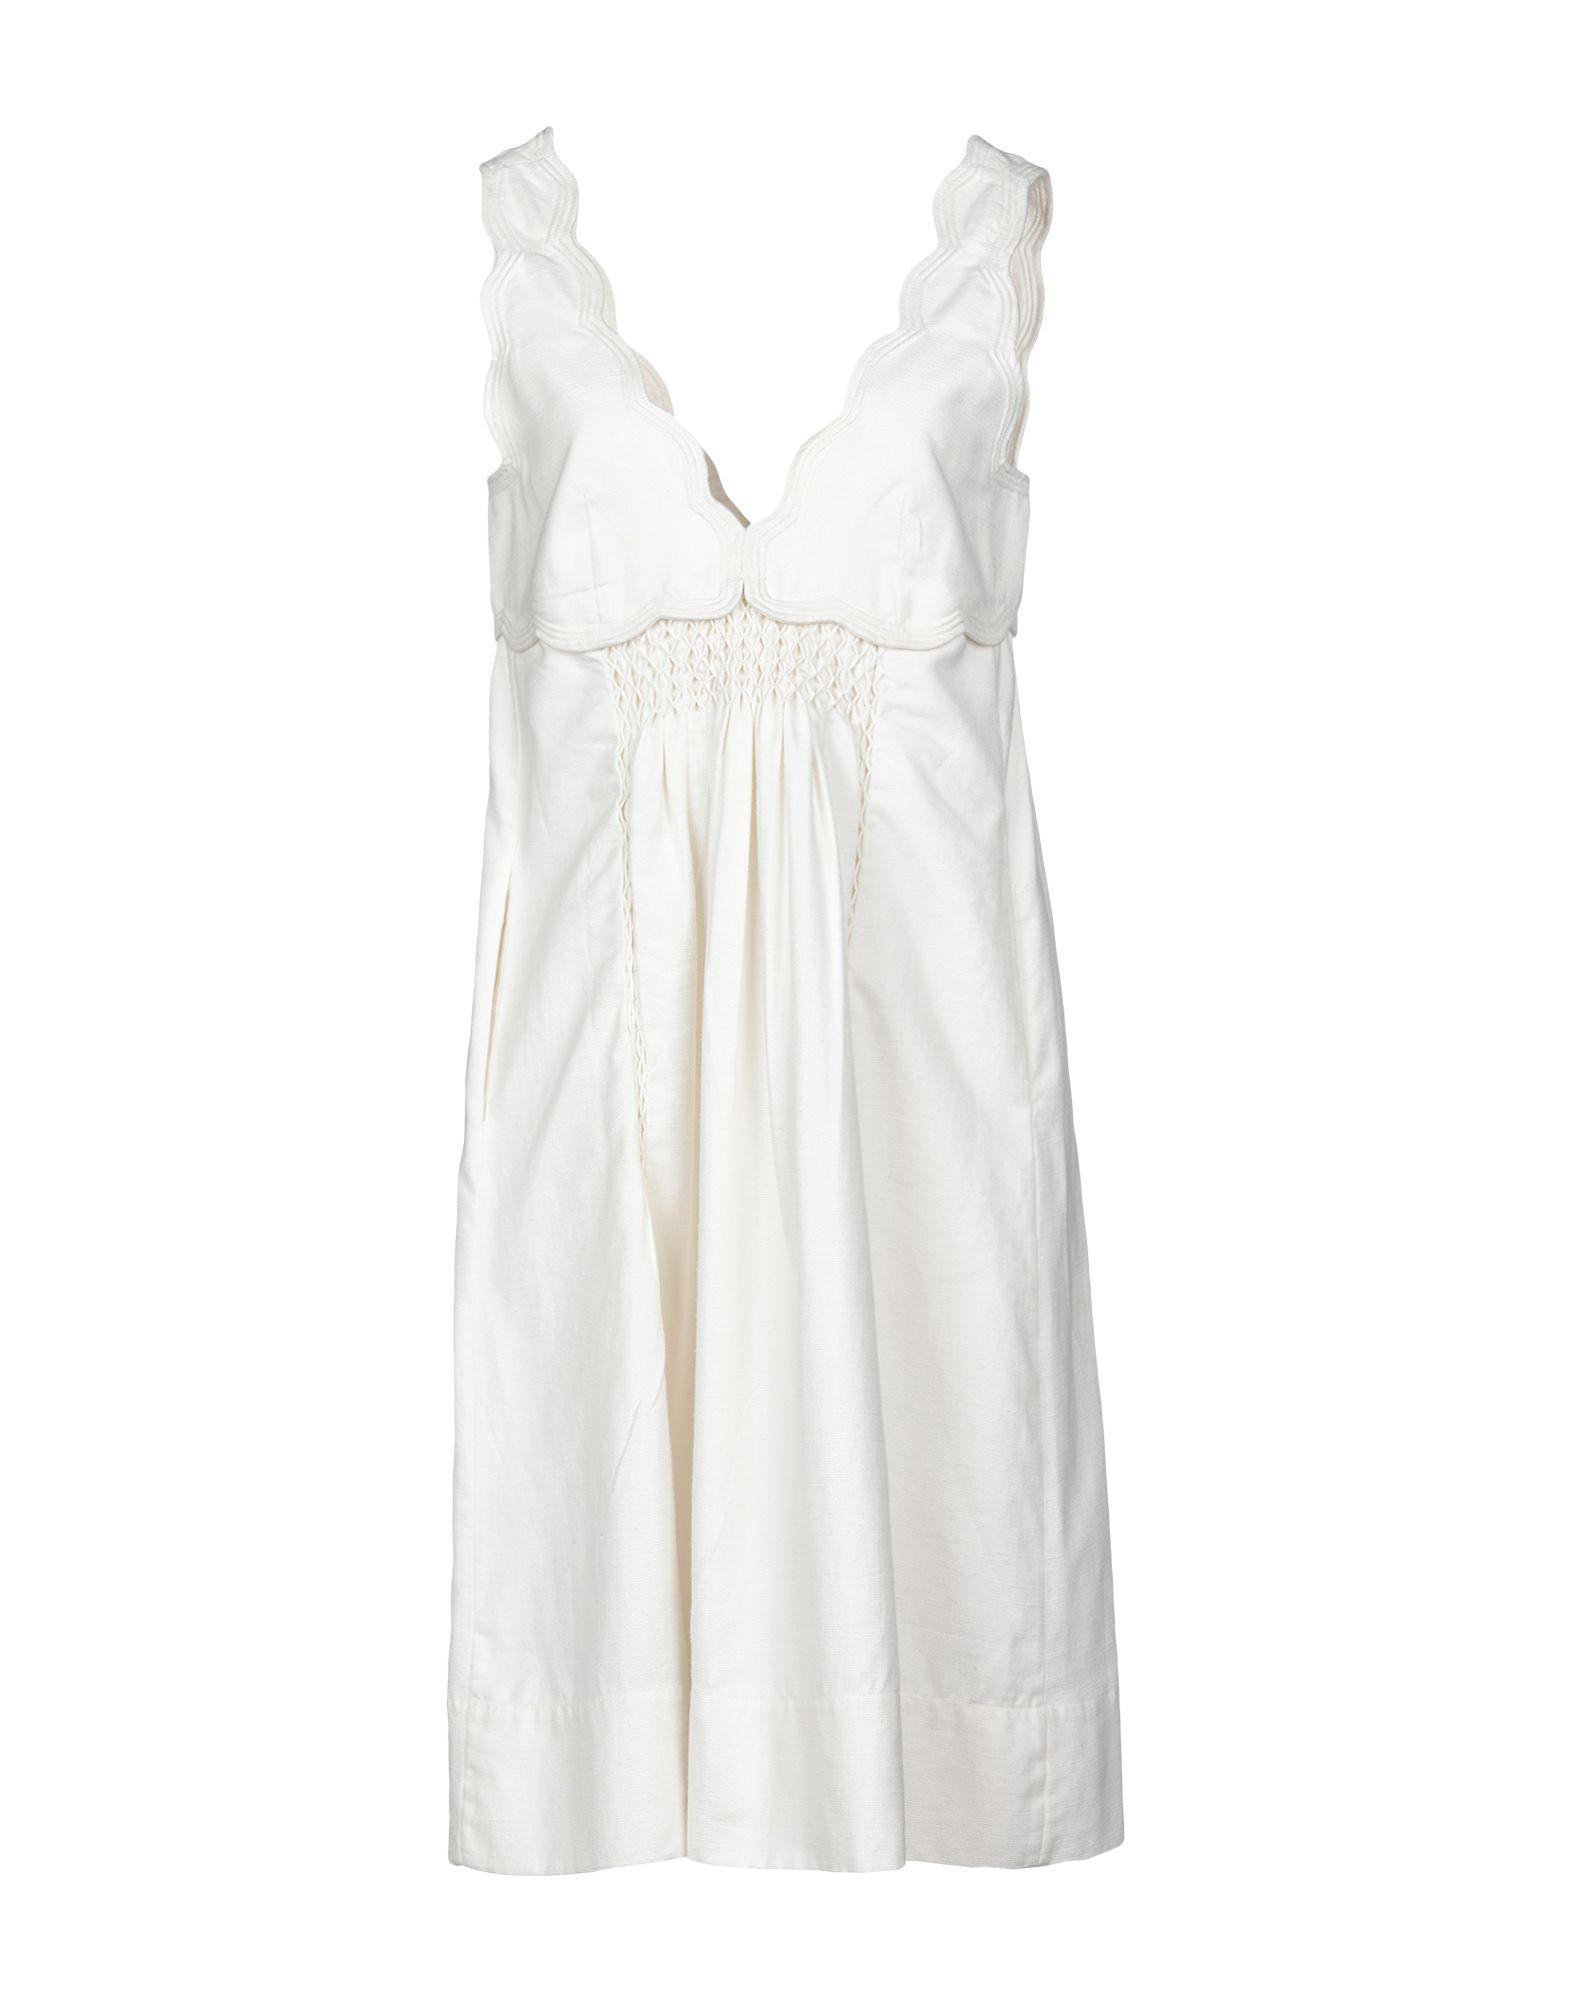 Isabel Marant Cotton Knee-length Dress in White - Lyst